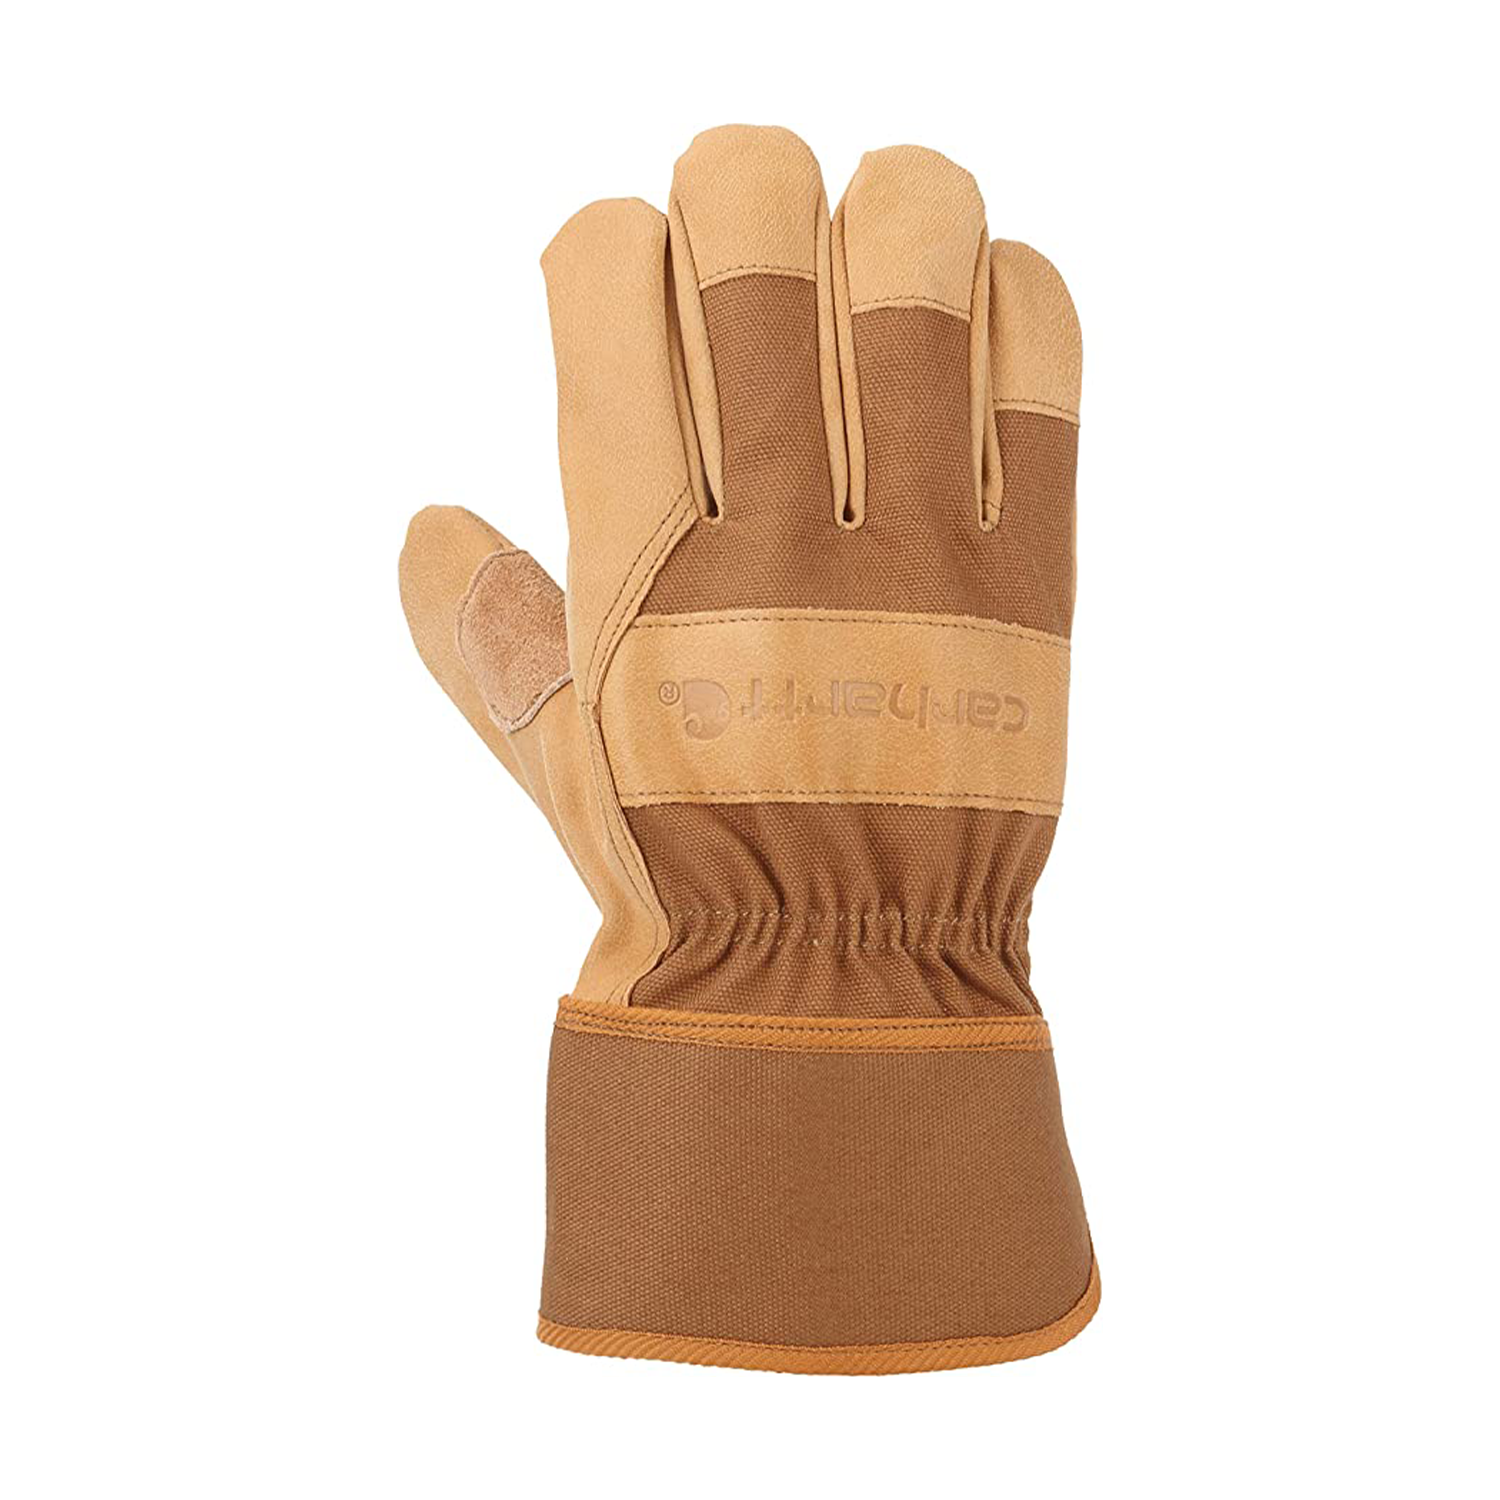 Carhartt Grain leather Glove